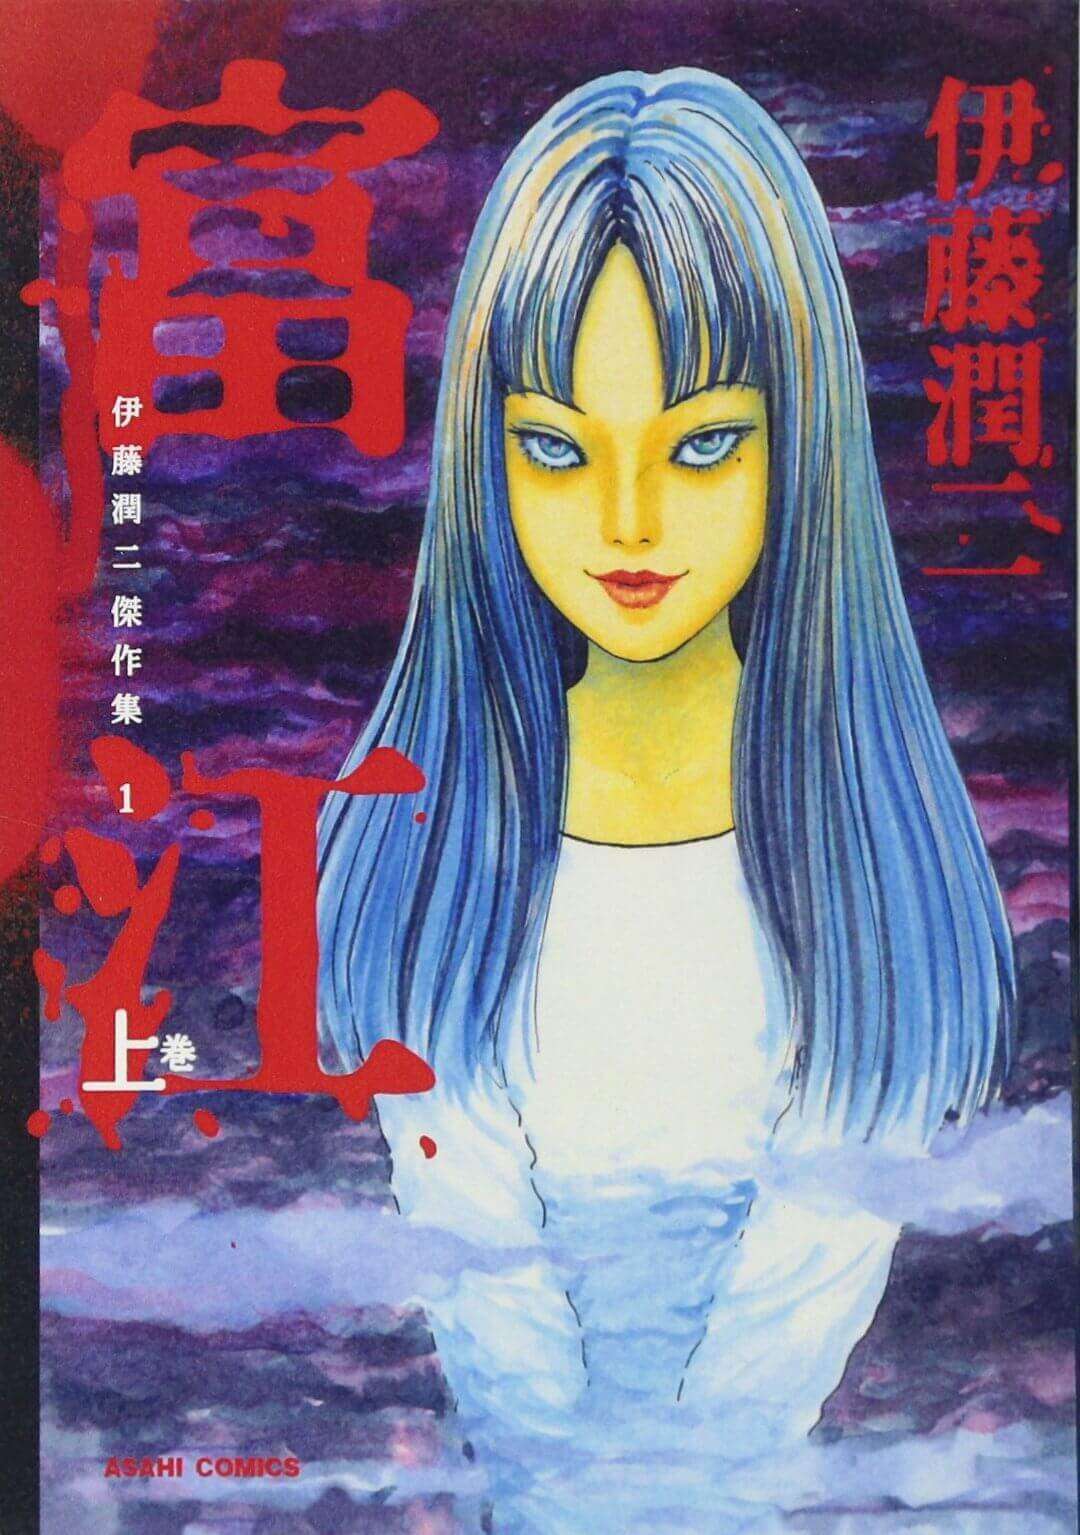 Novo Projeto de Anime Inspirado no Mangá de Terror Kesssaku-shū de Junji Itō